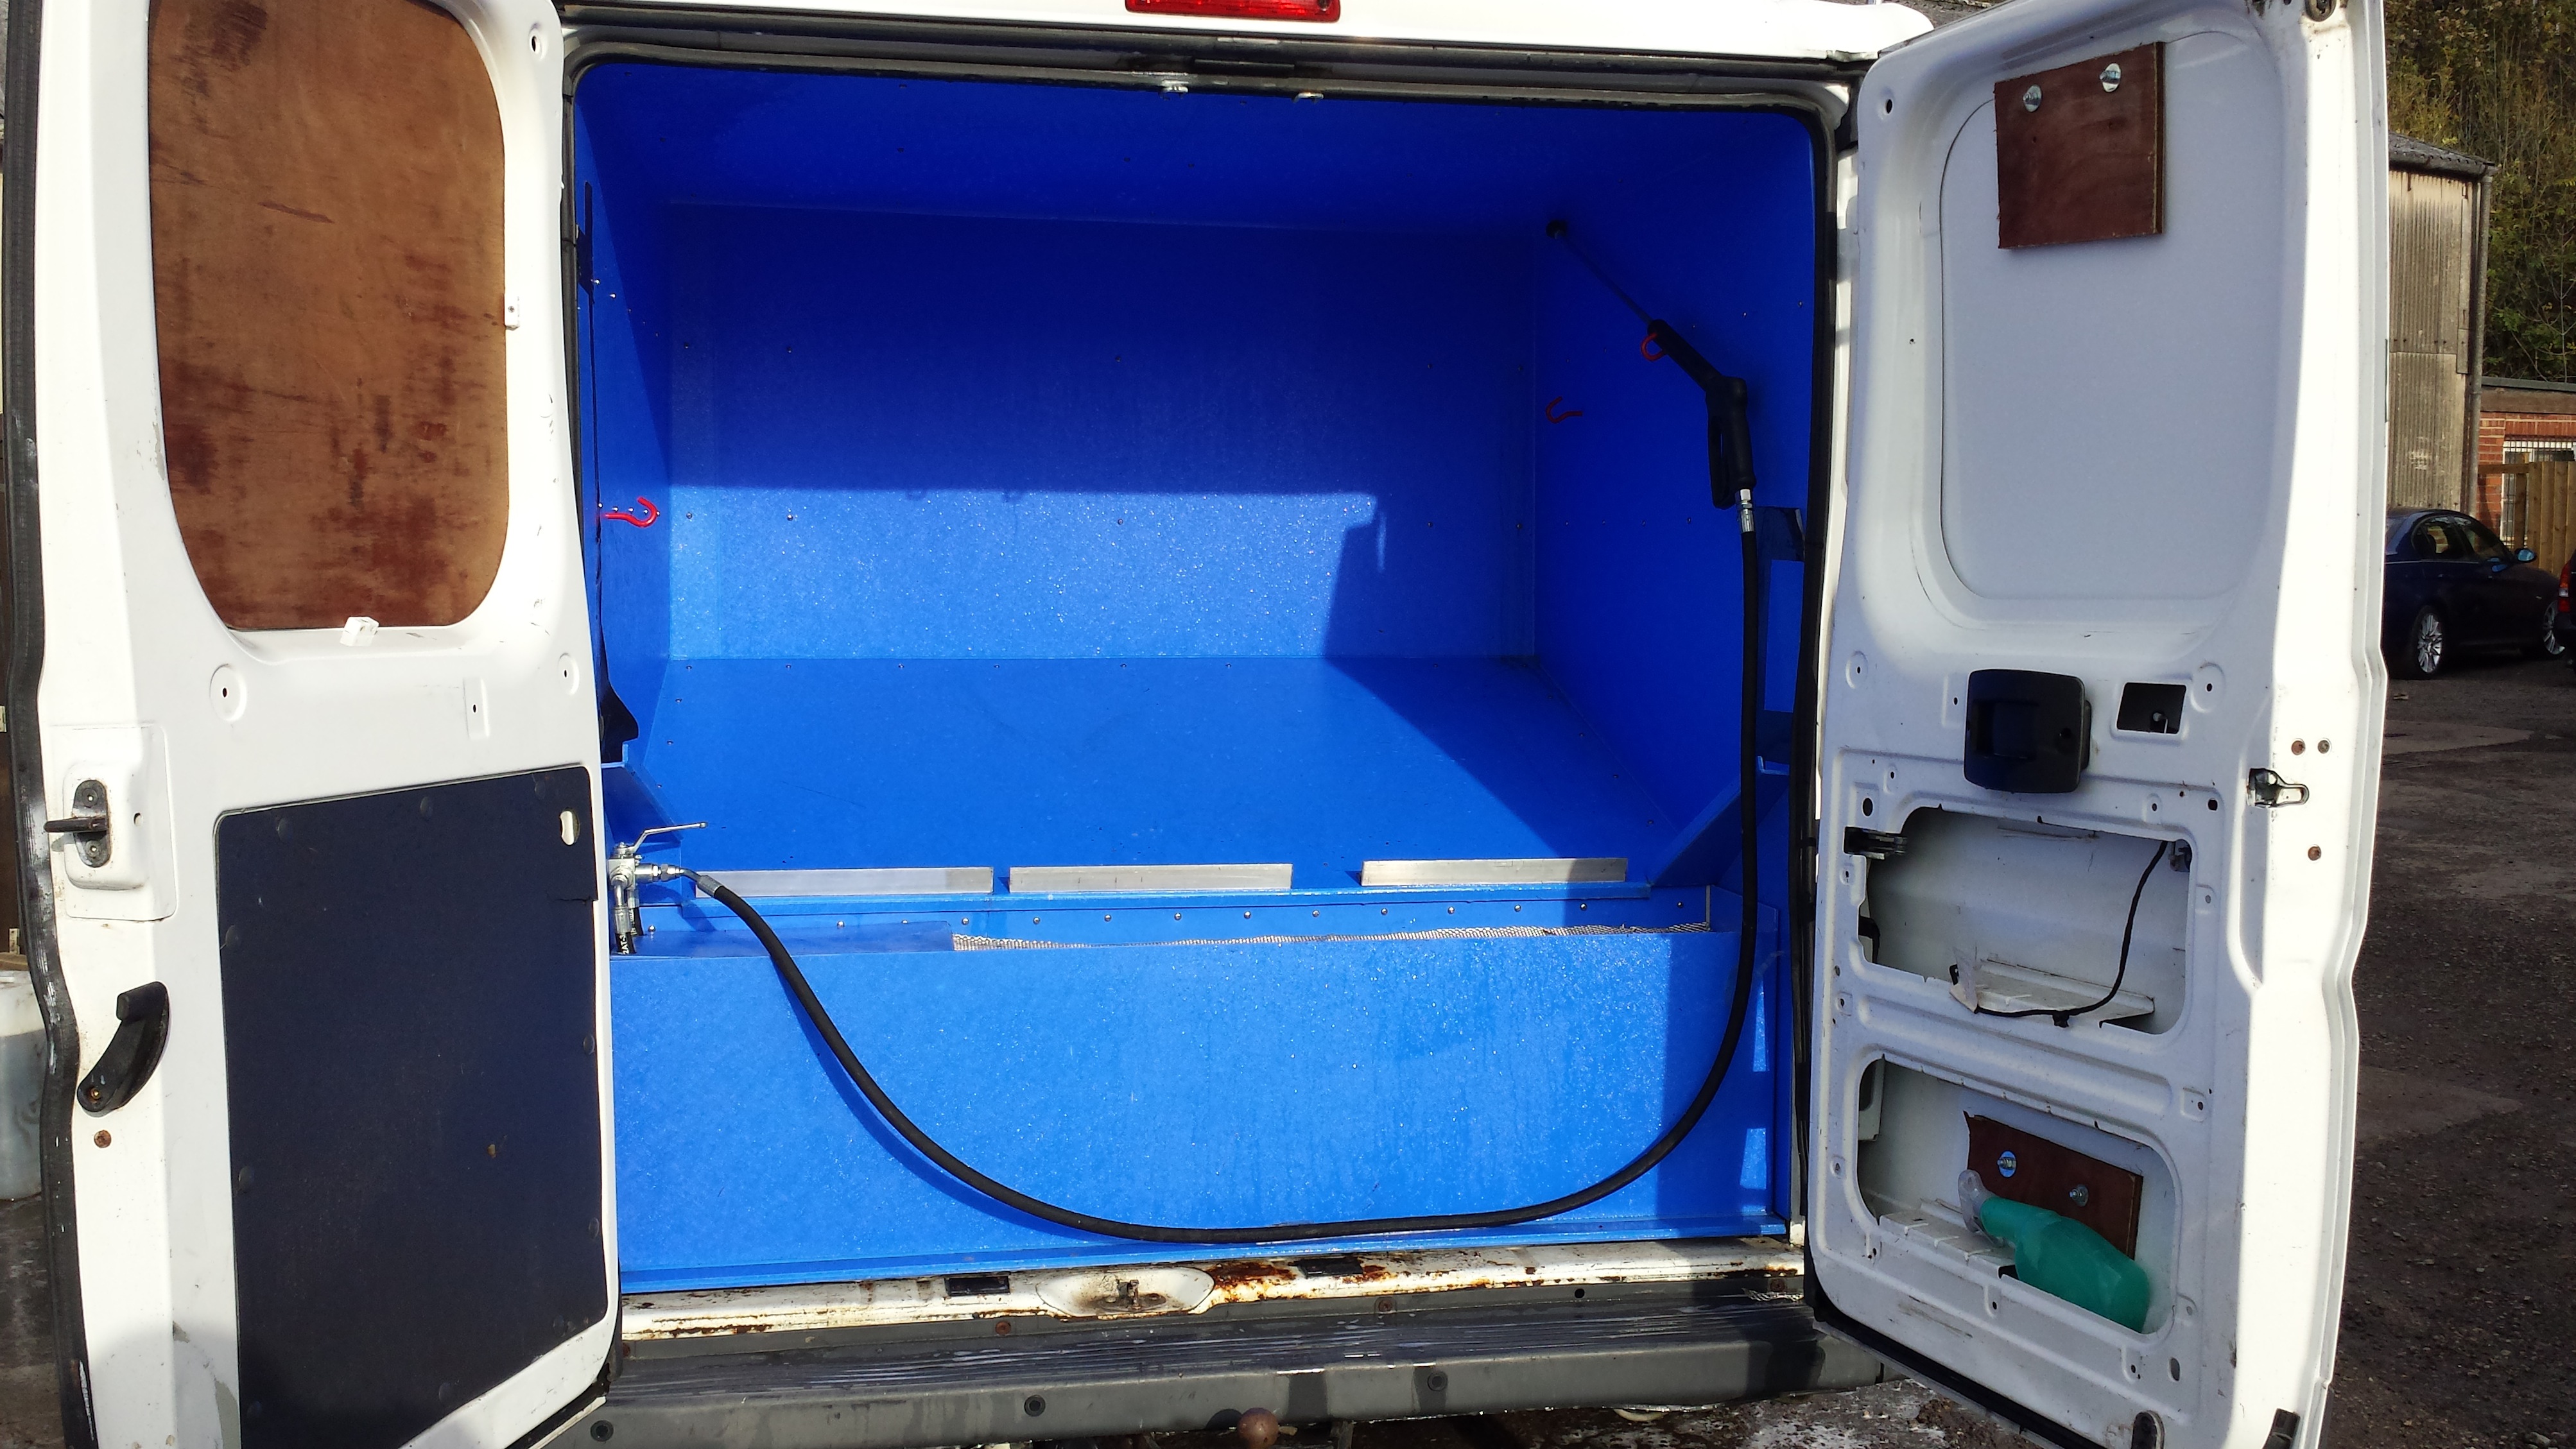 wheelie bin cleaning van for sale uk